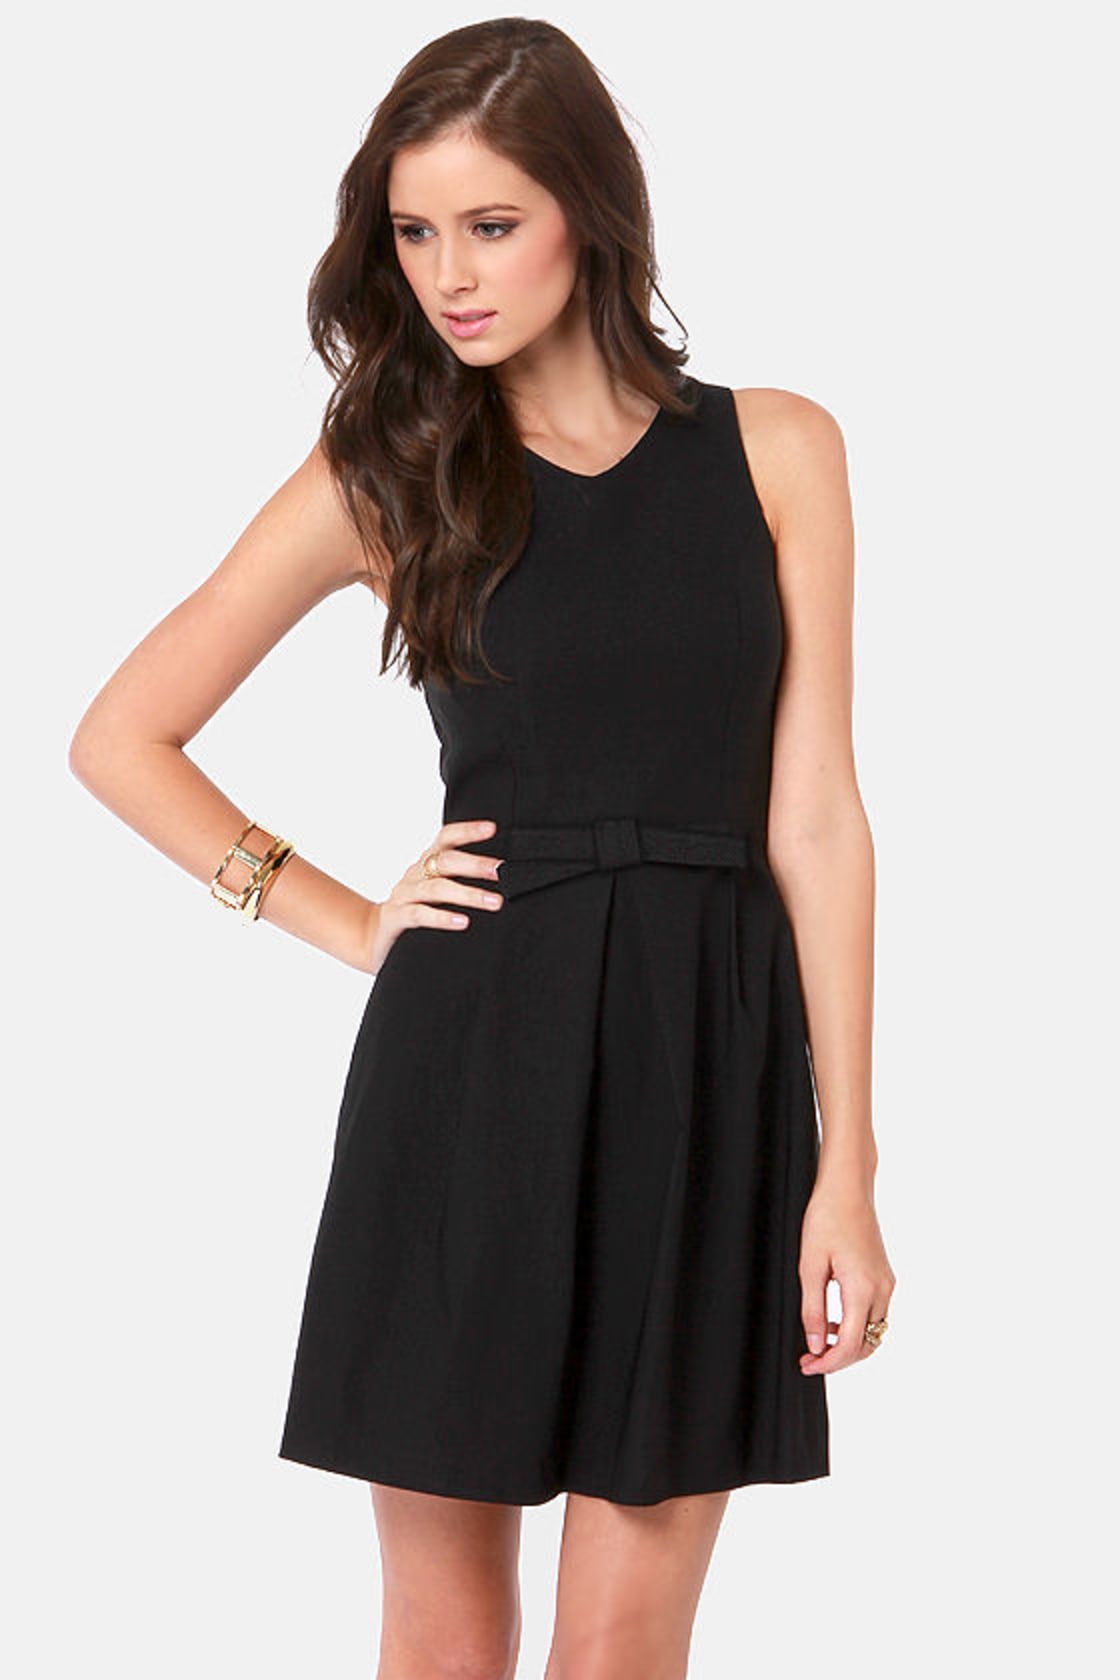 Pretty Black Dress - Fit and Flare Dress - $44.00 - Lulus